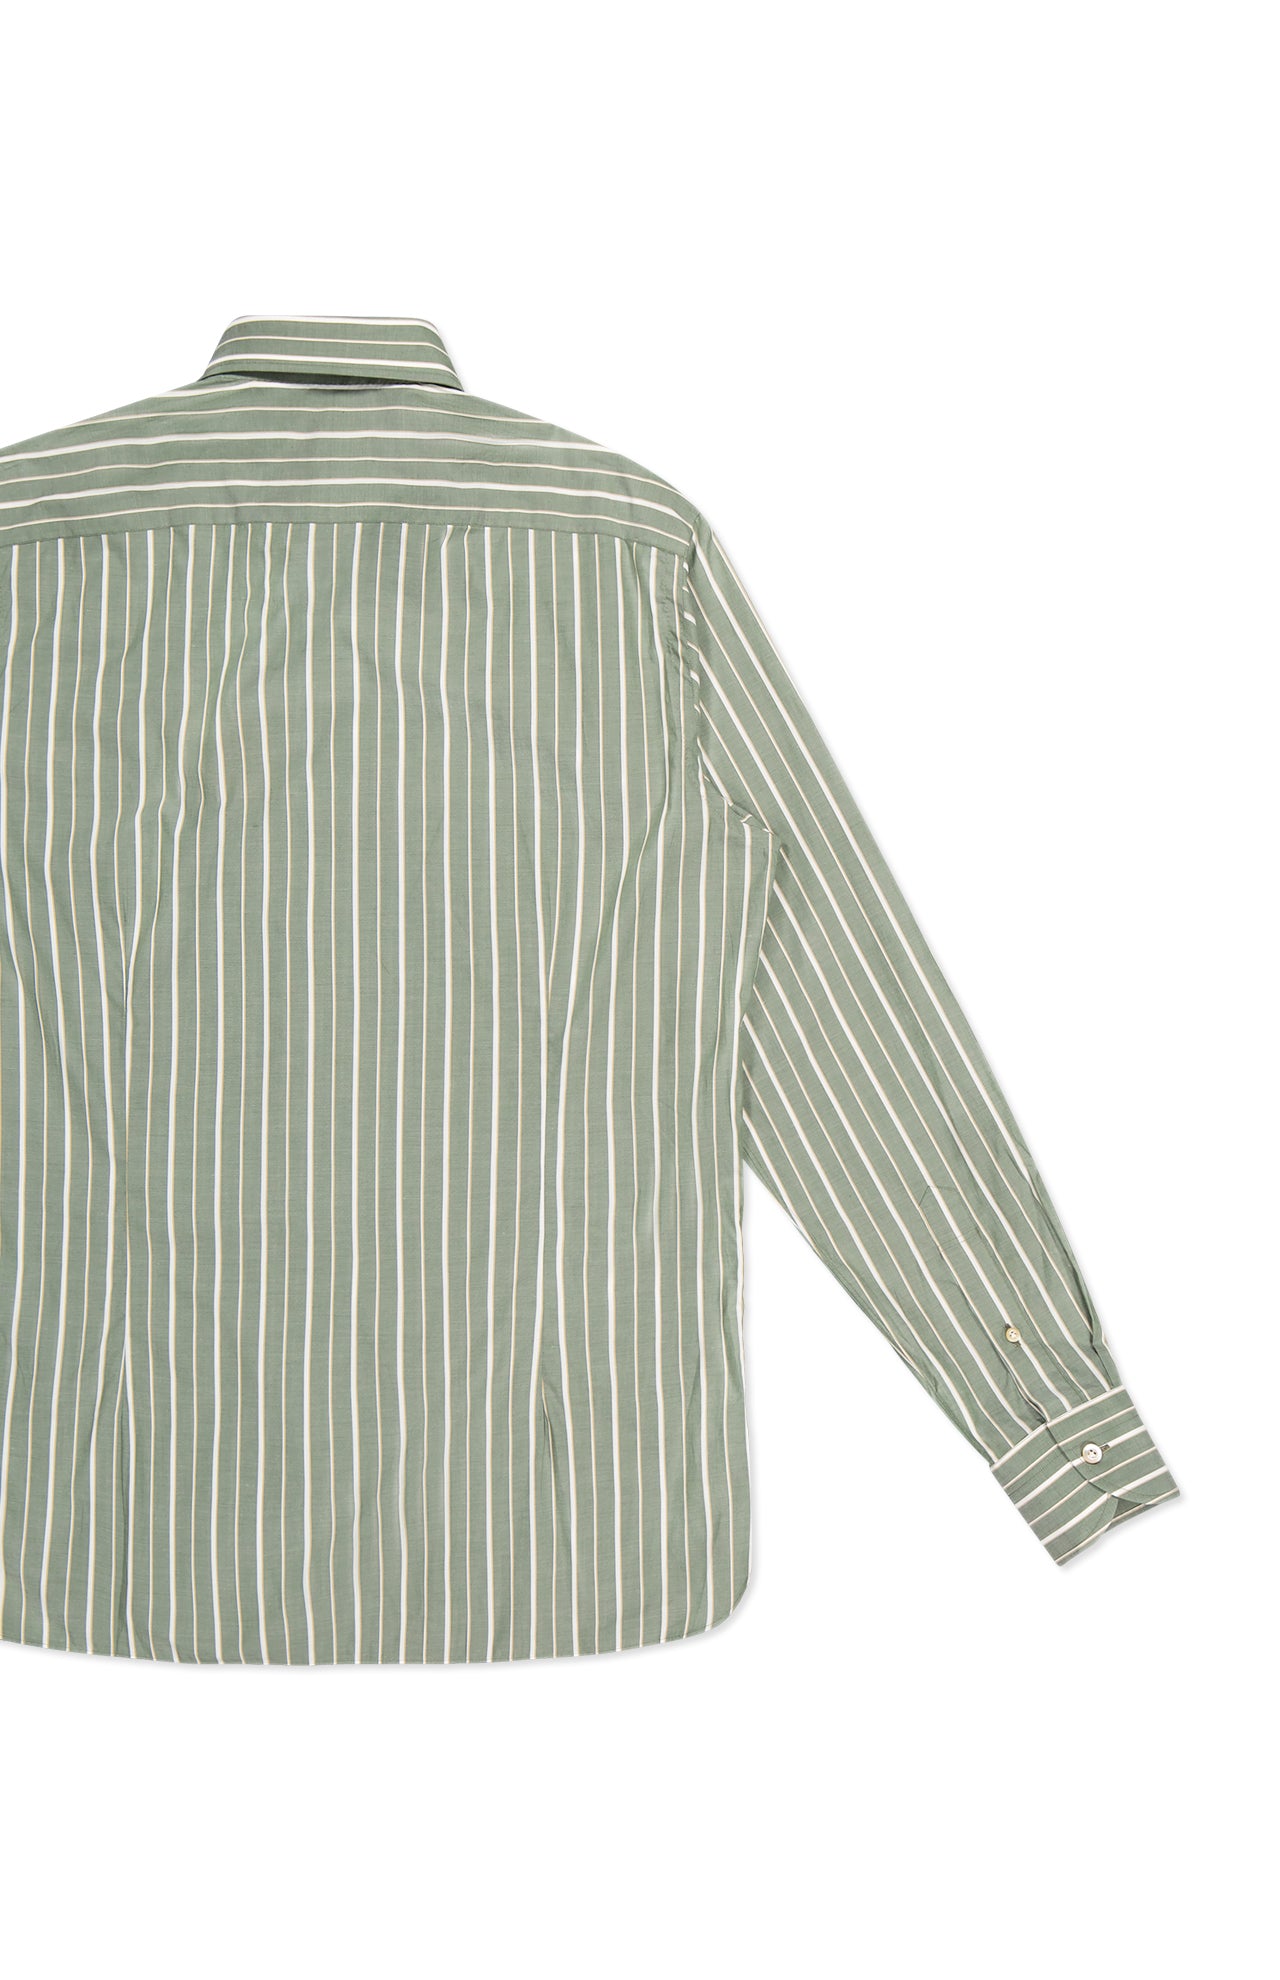 Stripe Shirt (7359519686771)